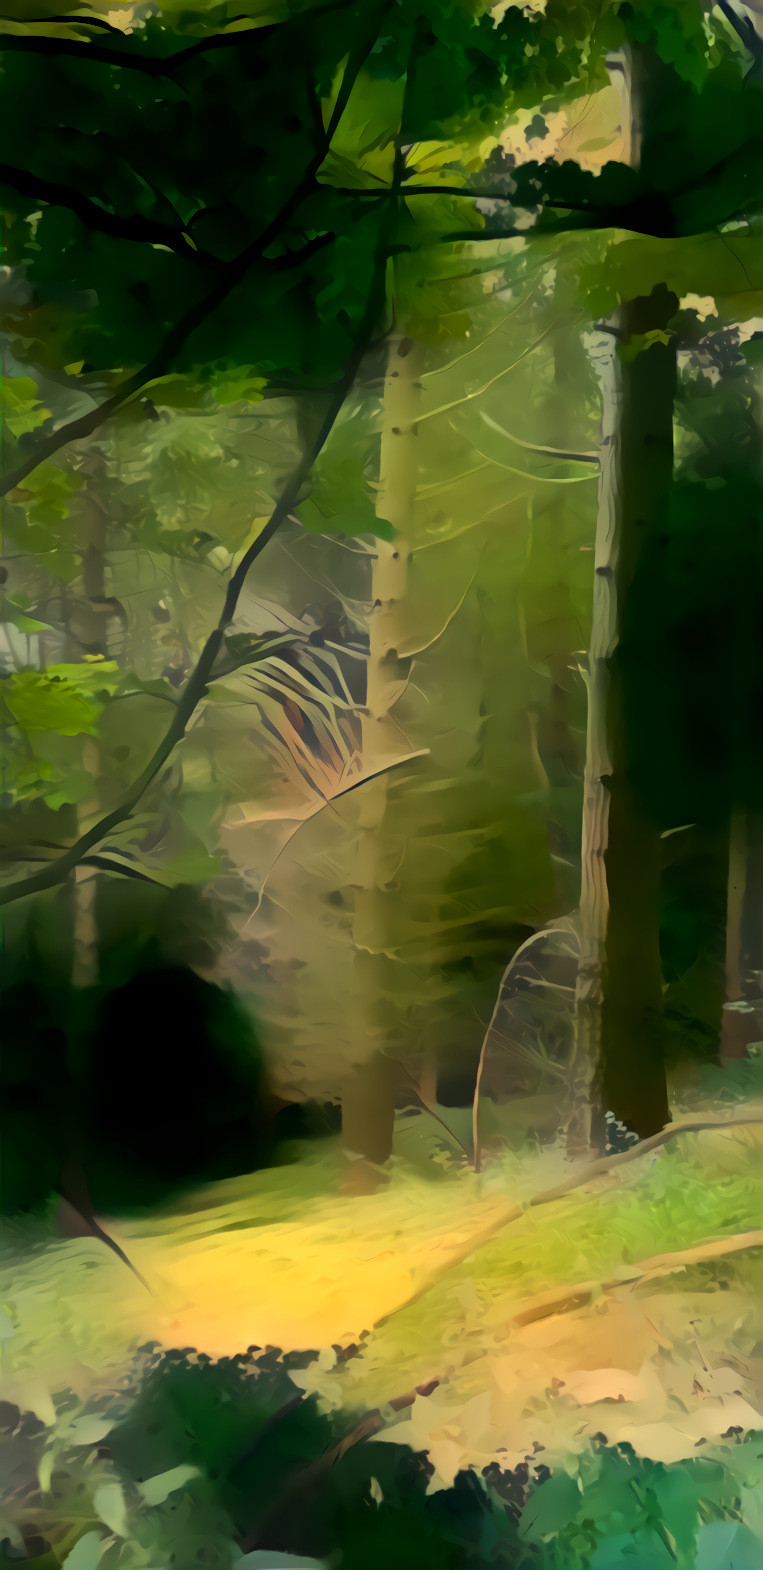 A solitary birch